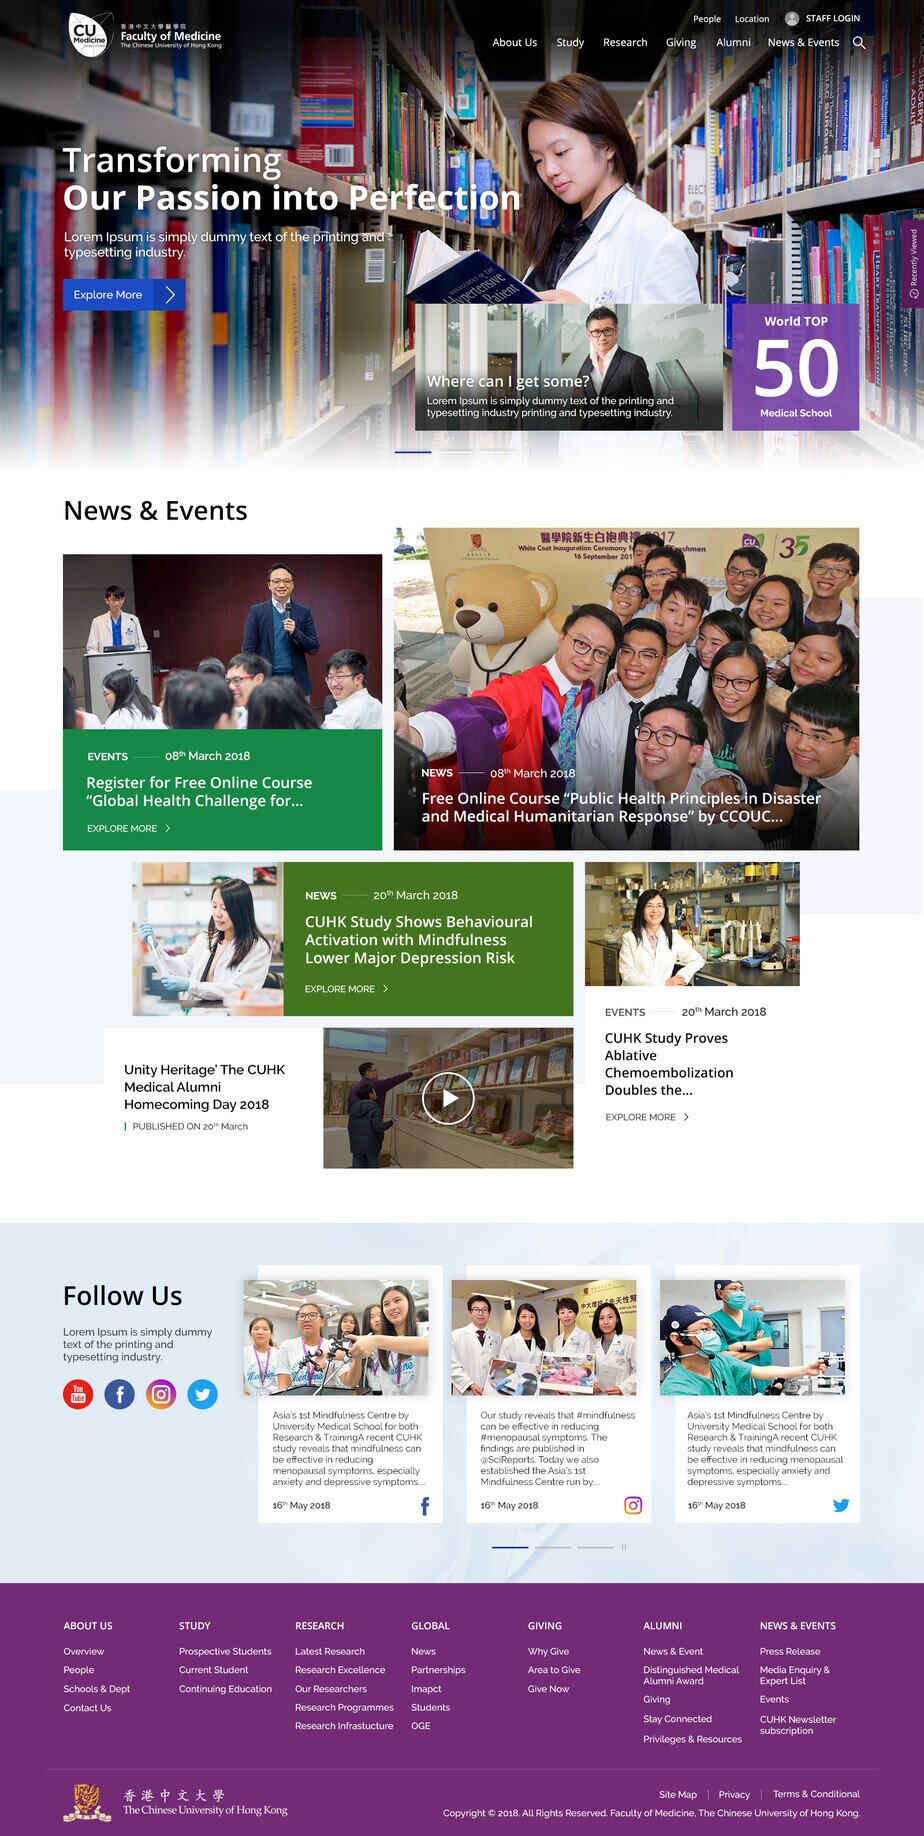 Chinese University of Hong Kong website screenshot for desktop version 1 of 5